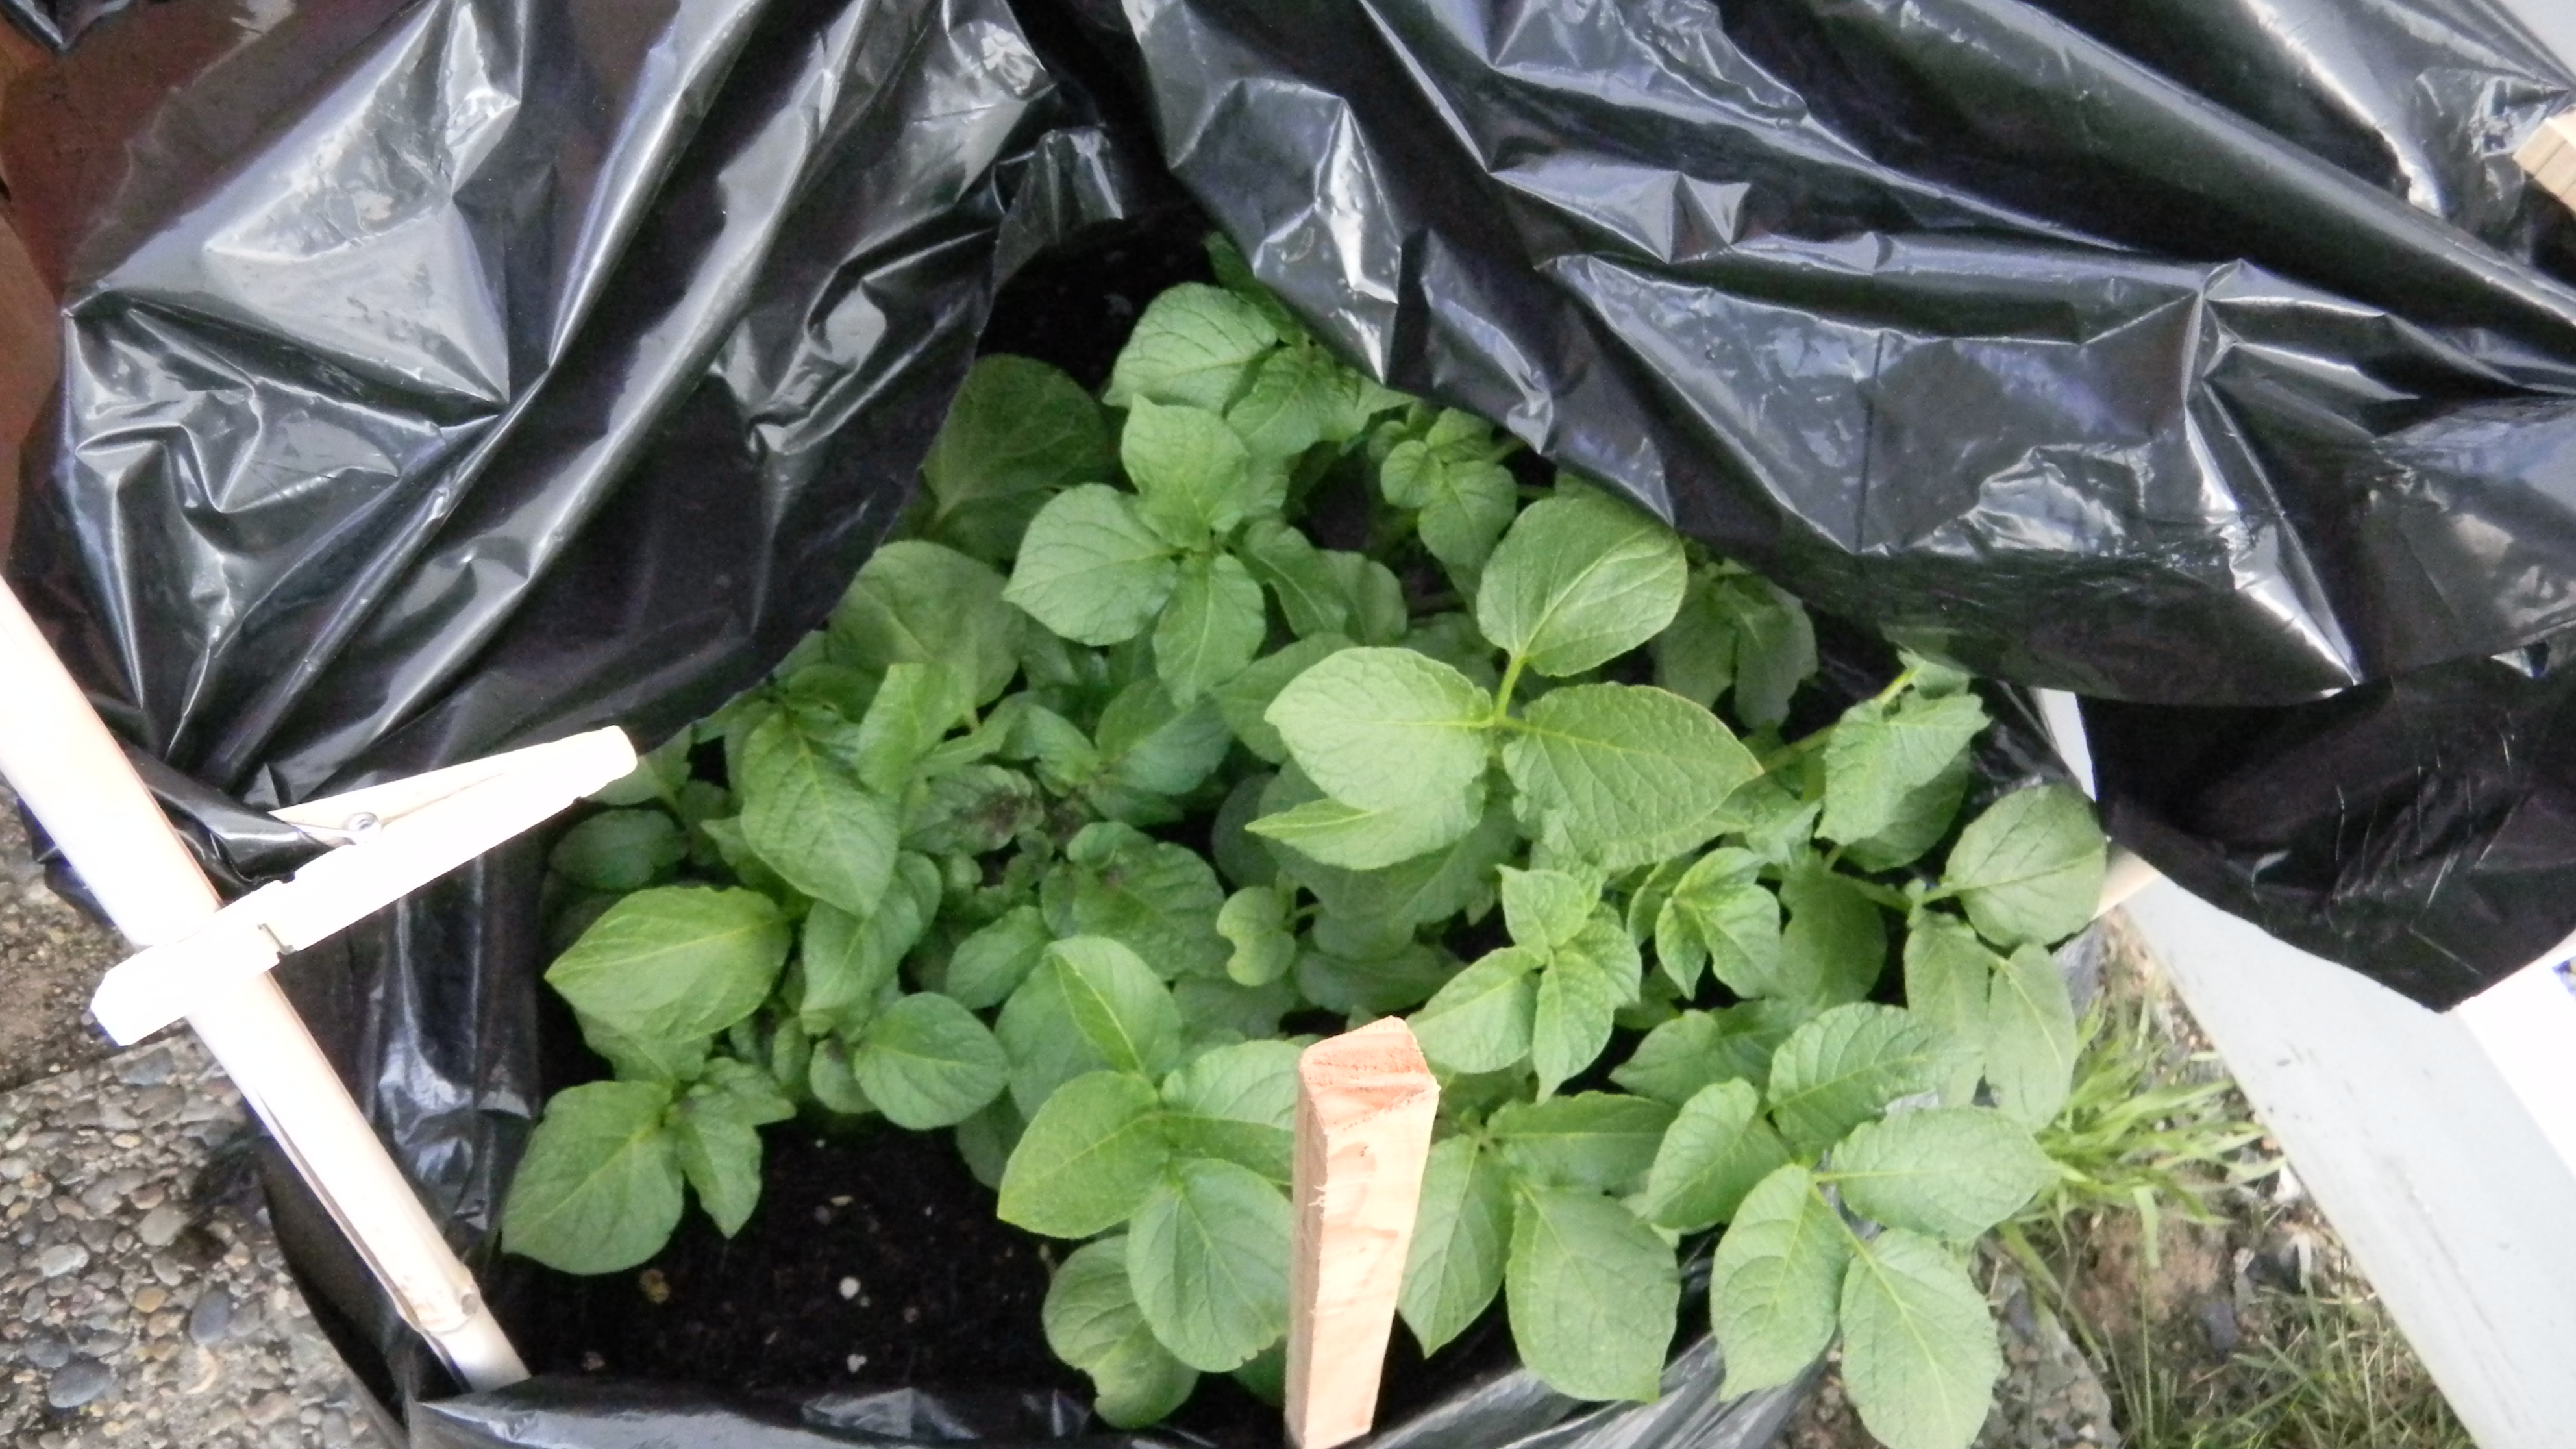 Growing Potatoes in a Trash Bag